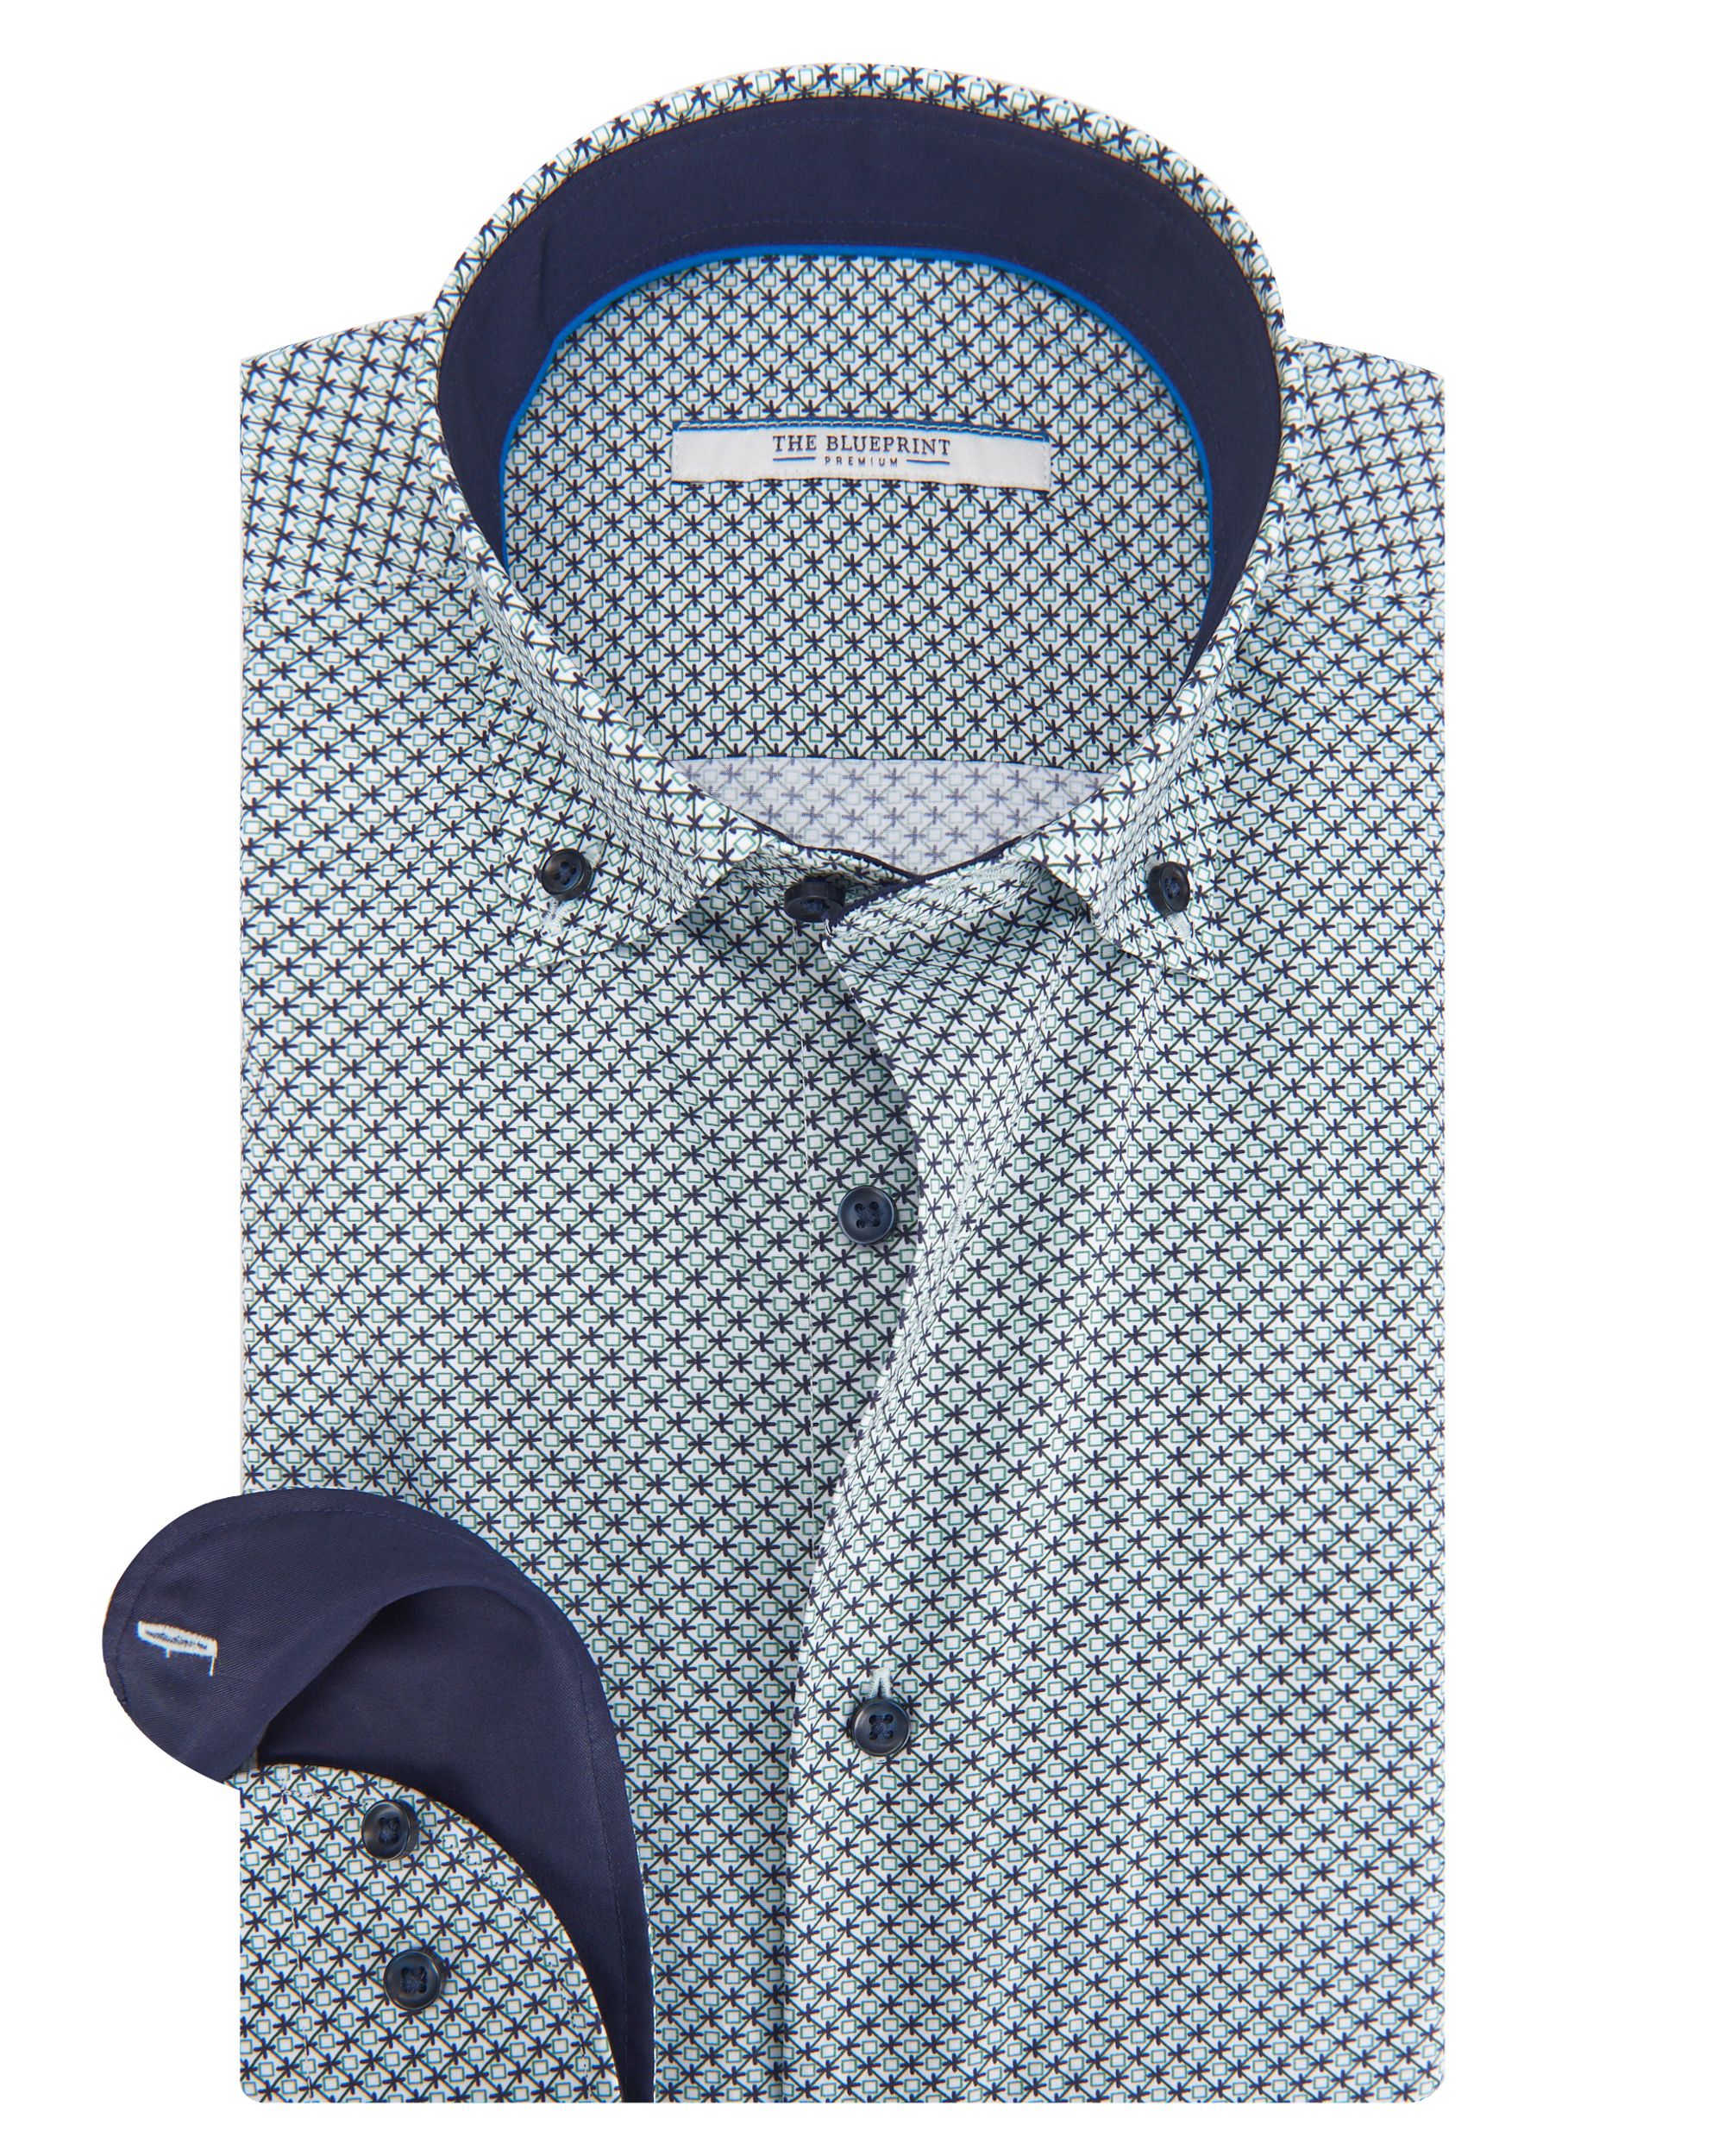 The BLUEPRINT Premium Trendy overhemd LM Groen dessin 084483-001-L